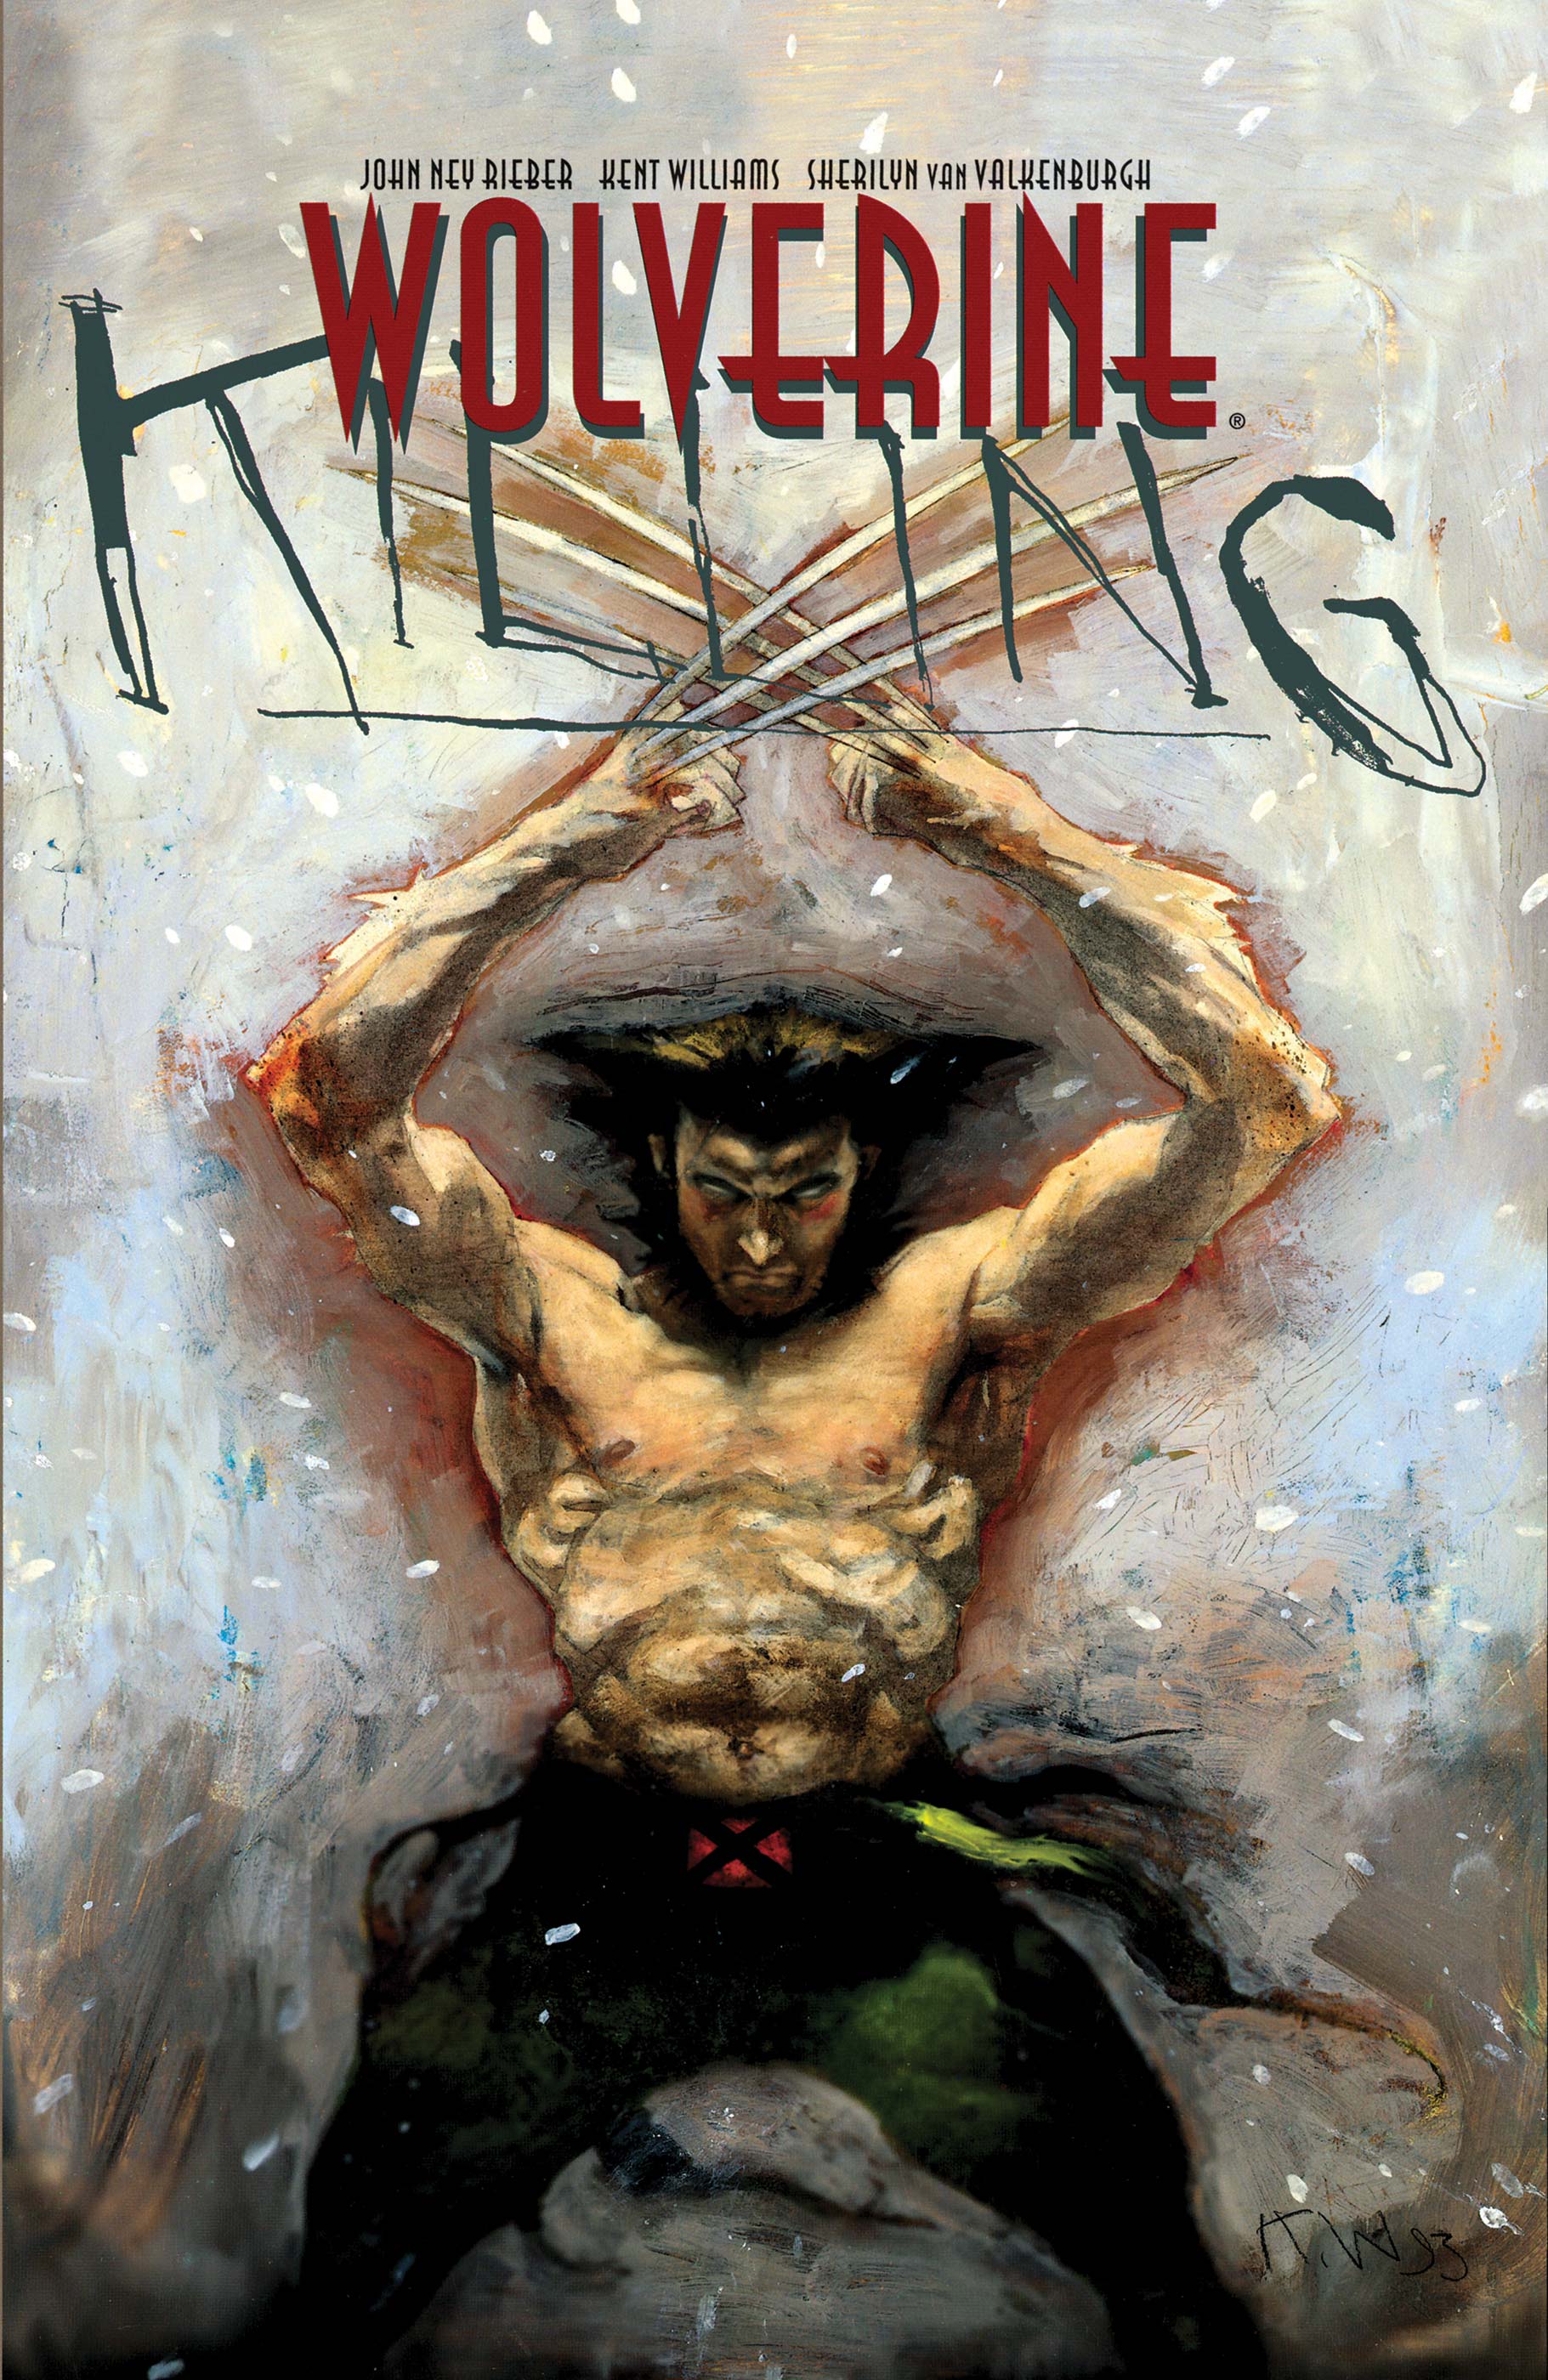 Wolverine Killing (1993) #1